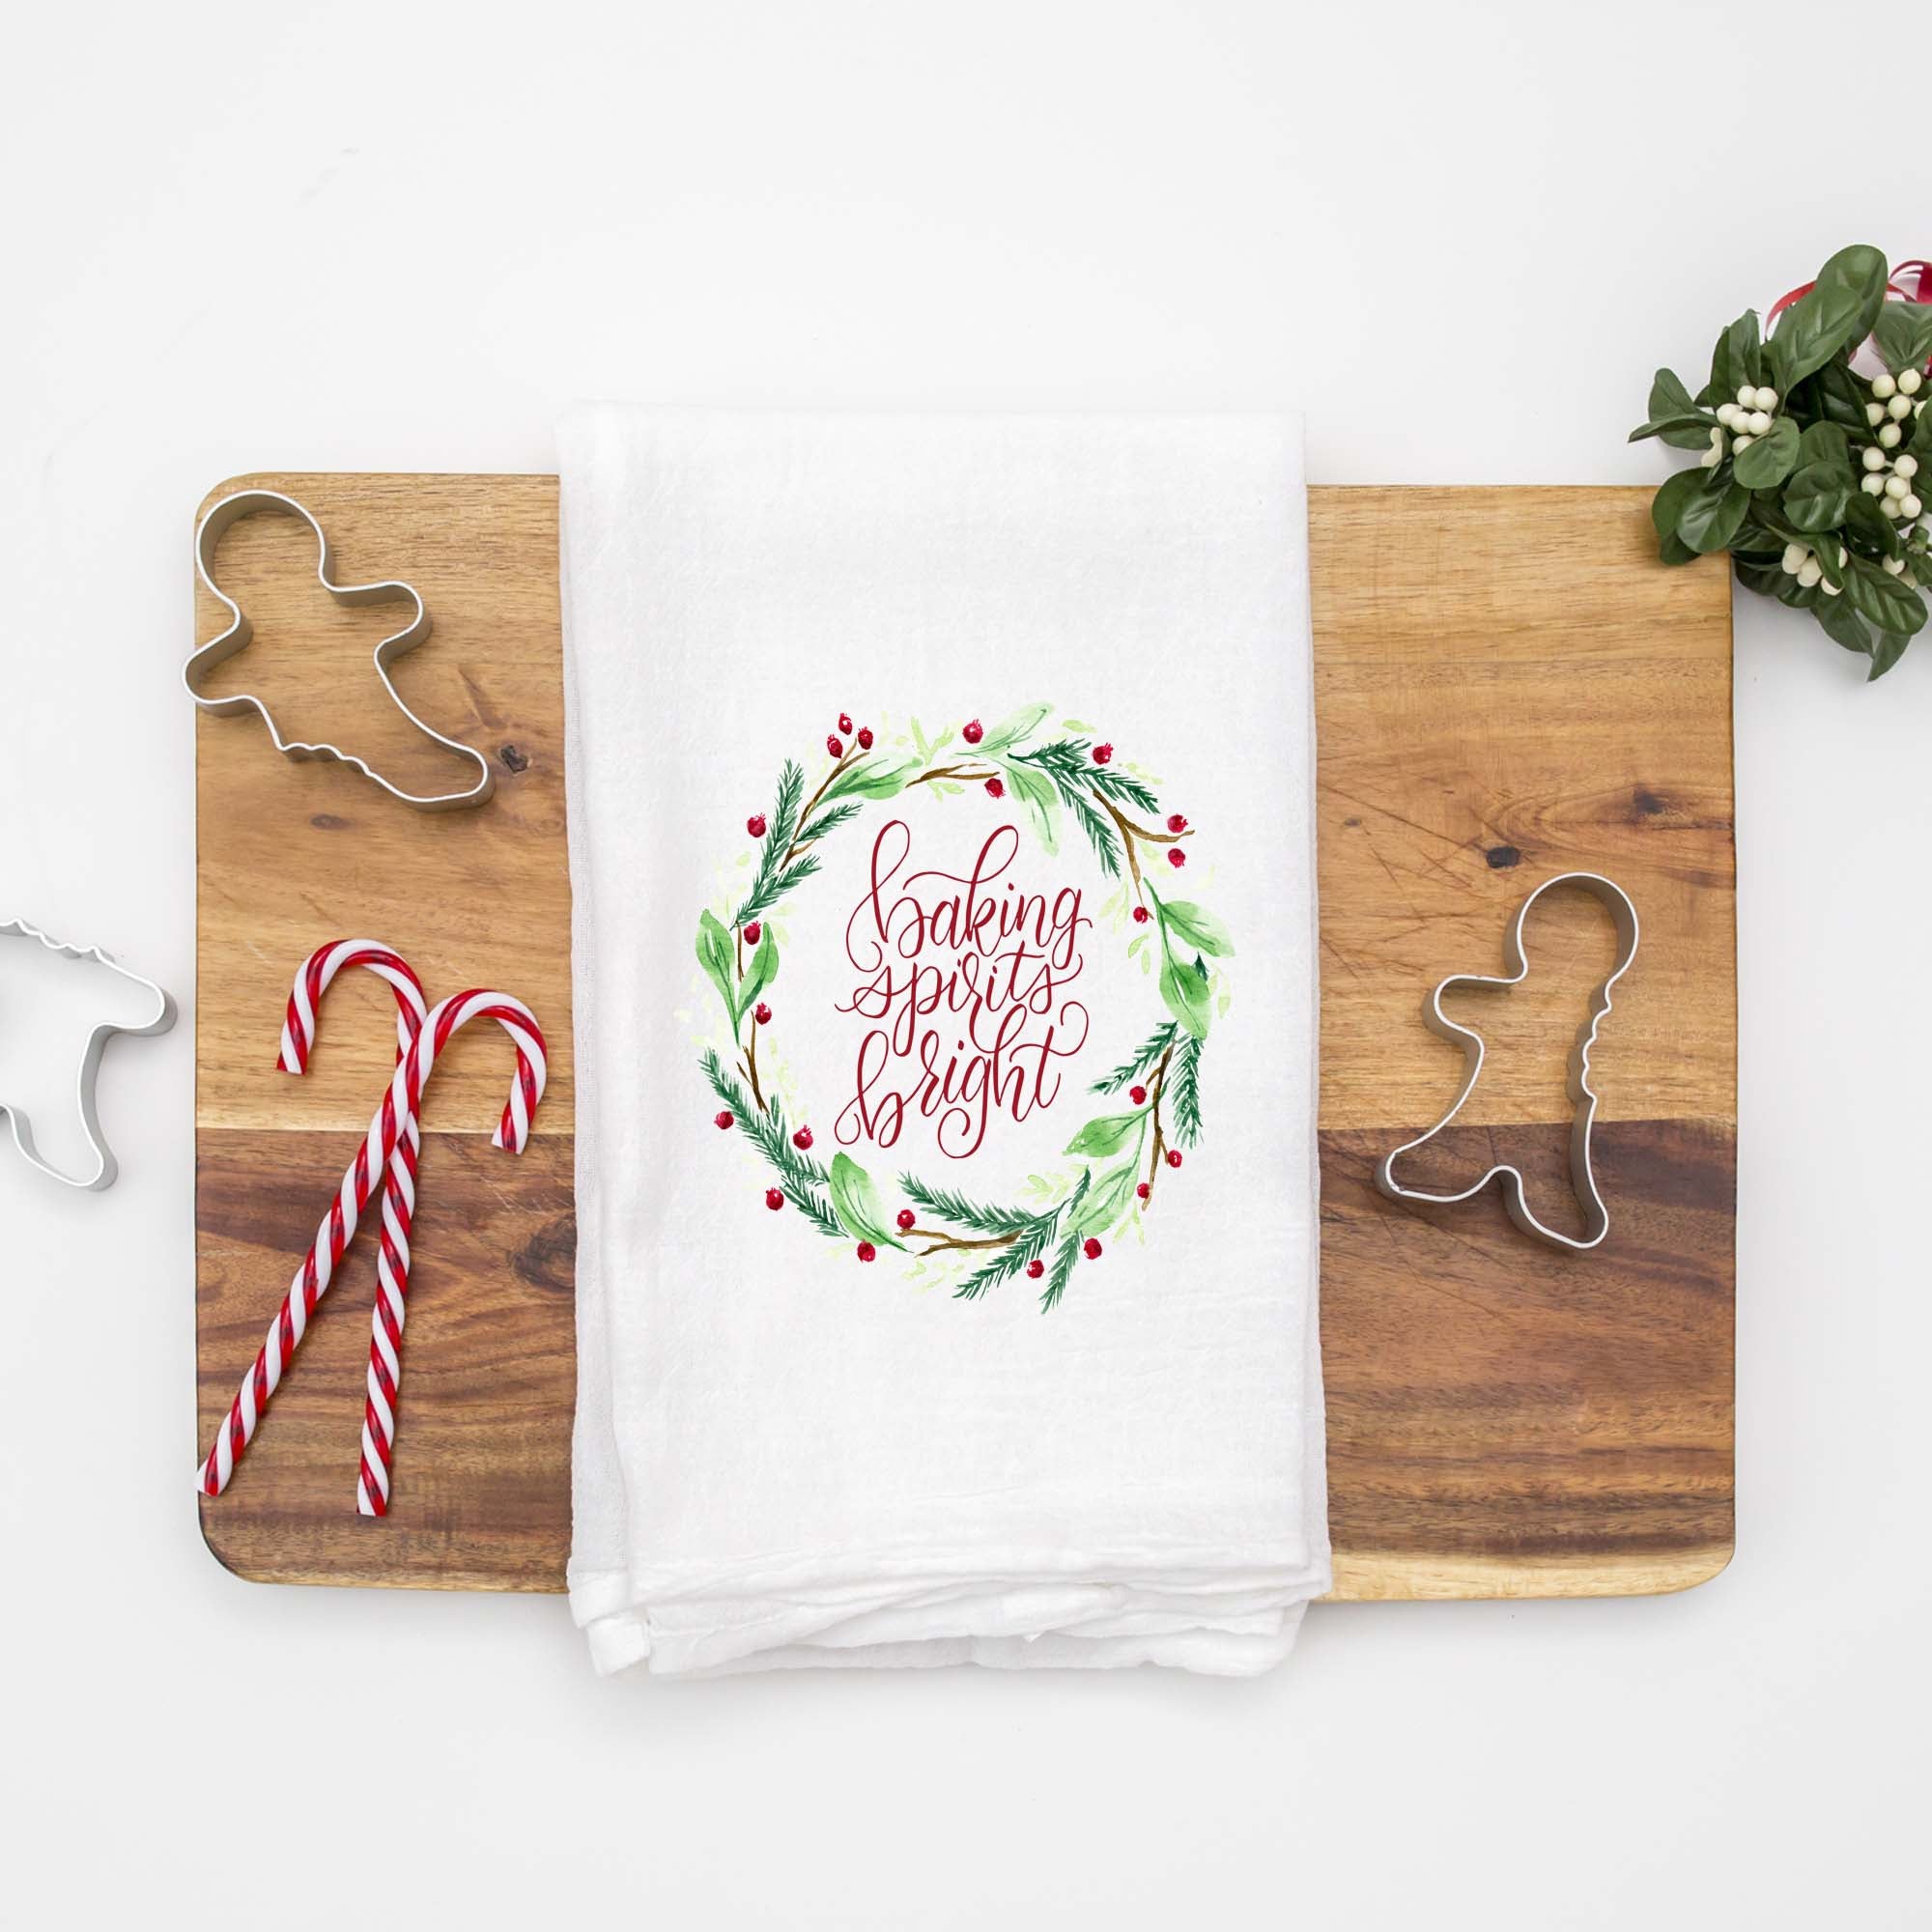 Buy Christmas Kitchen Towels. Baking Spirits Bright. This Kitchen